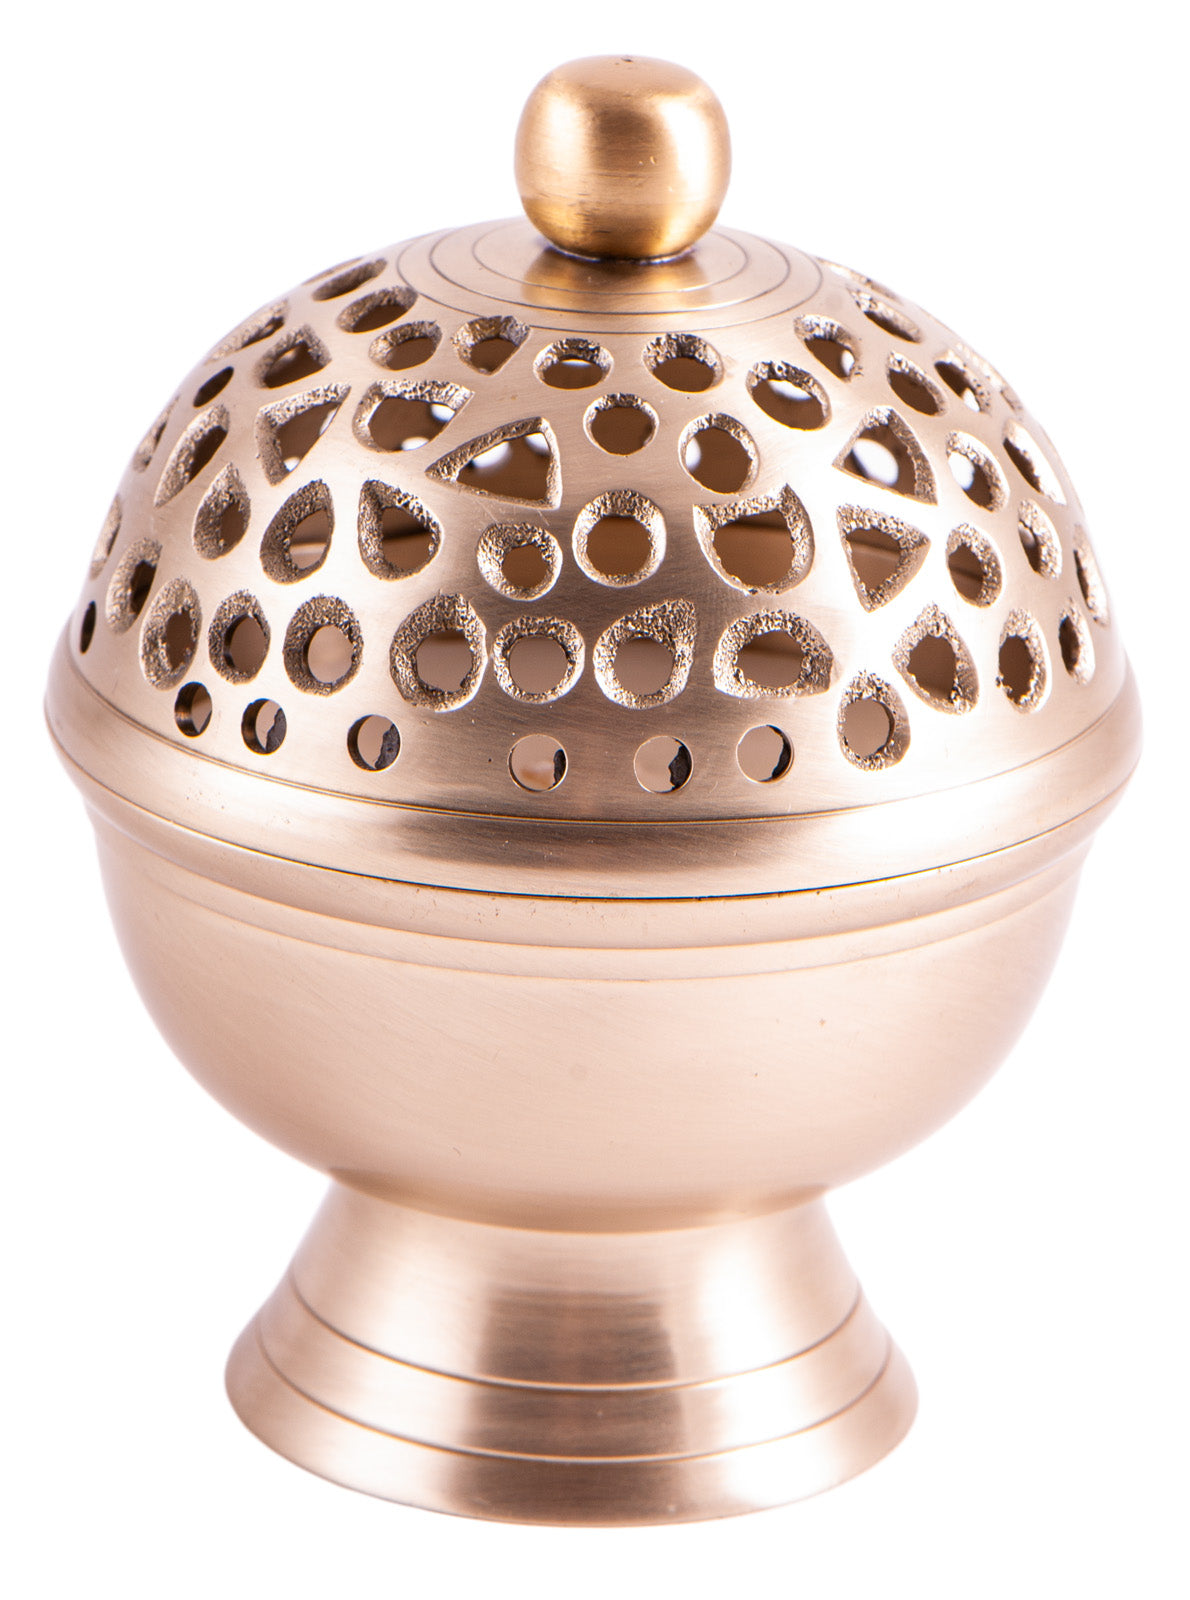 Luna - soy wax candle in brass vessel